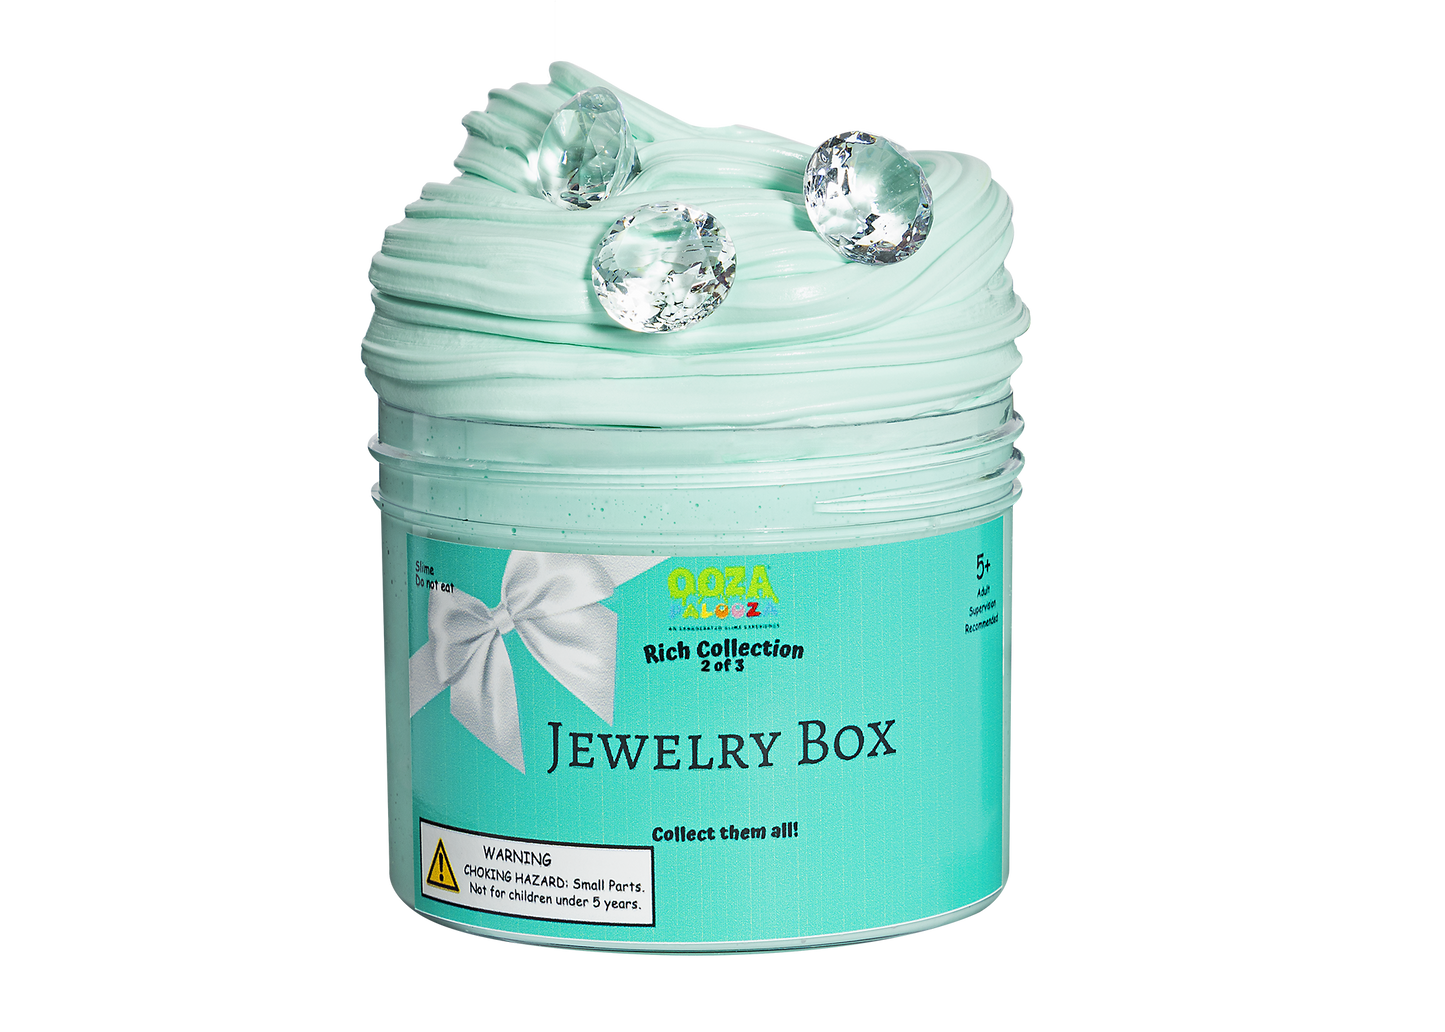 Jewelry Box Slime